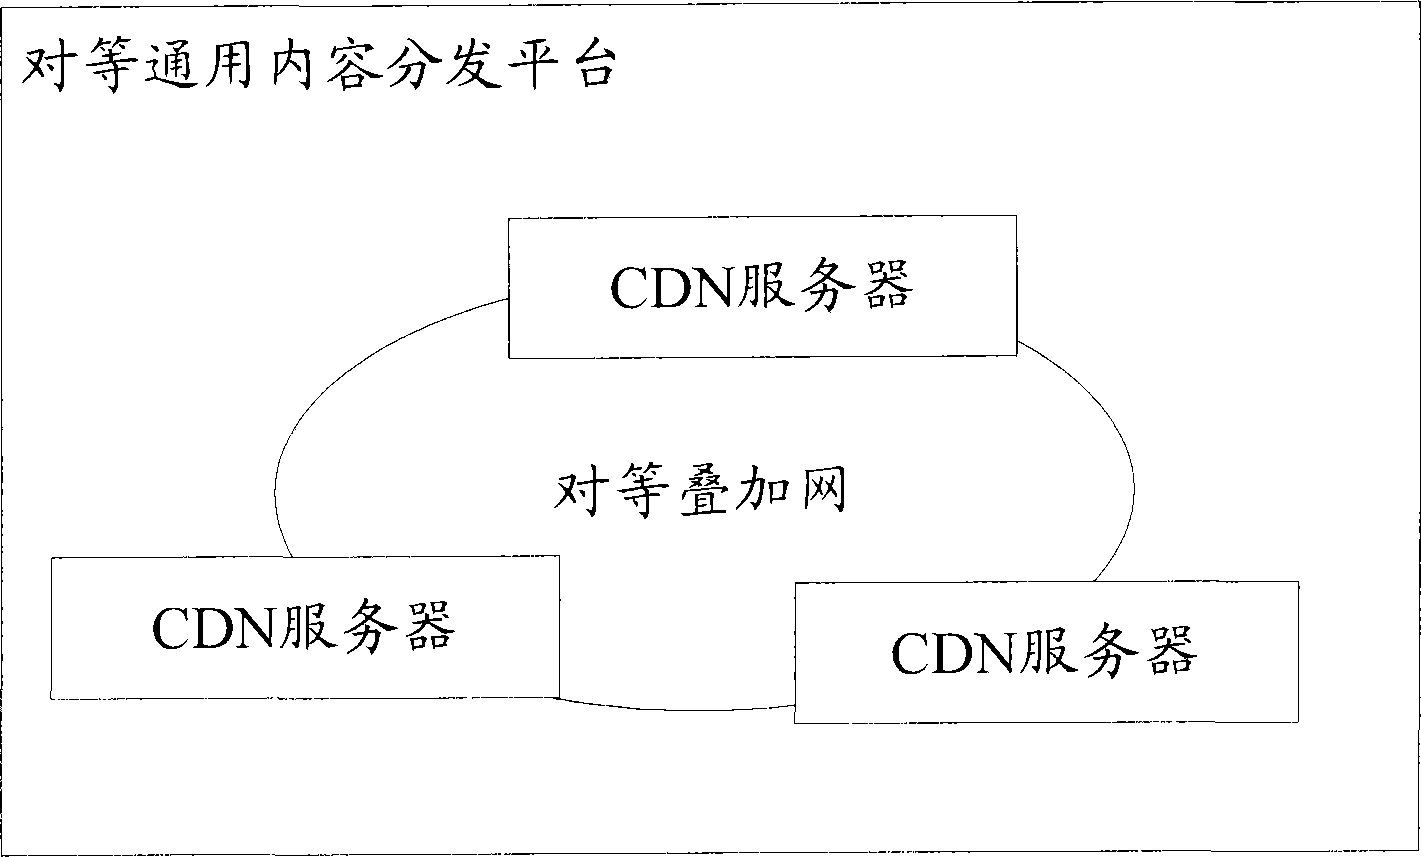 CDN server and content download method